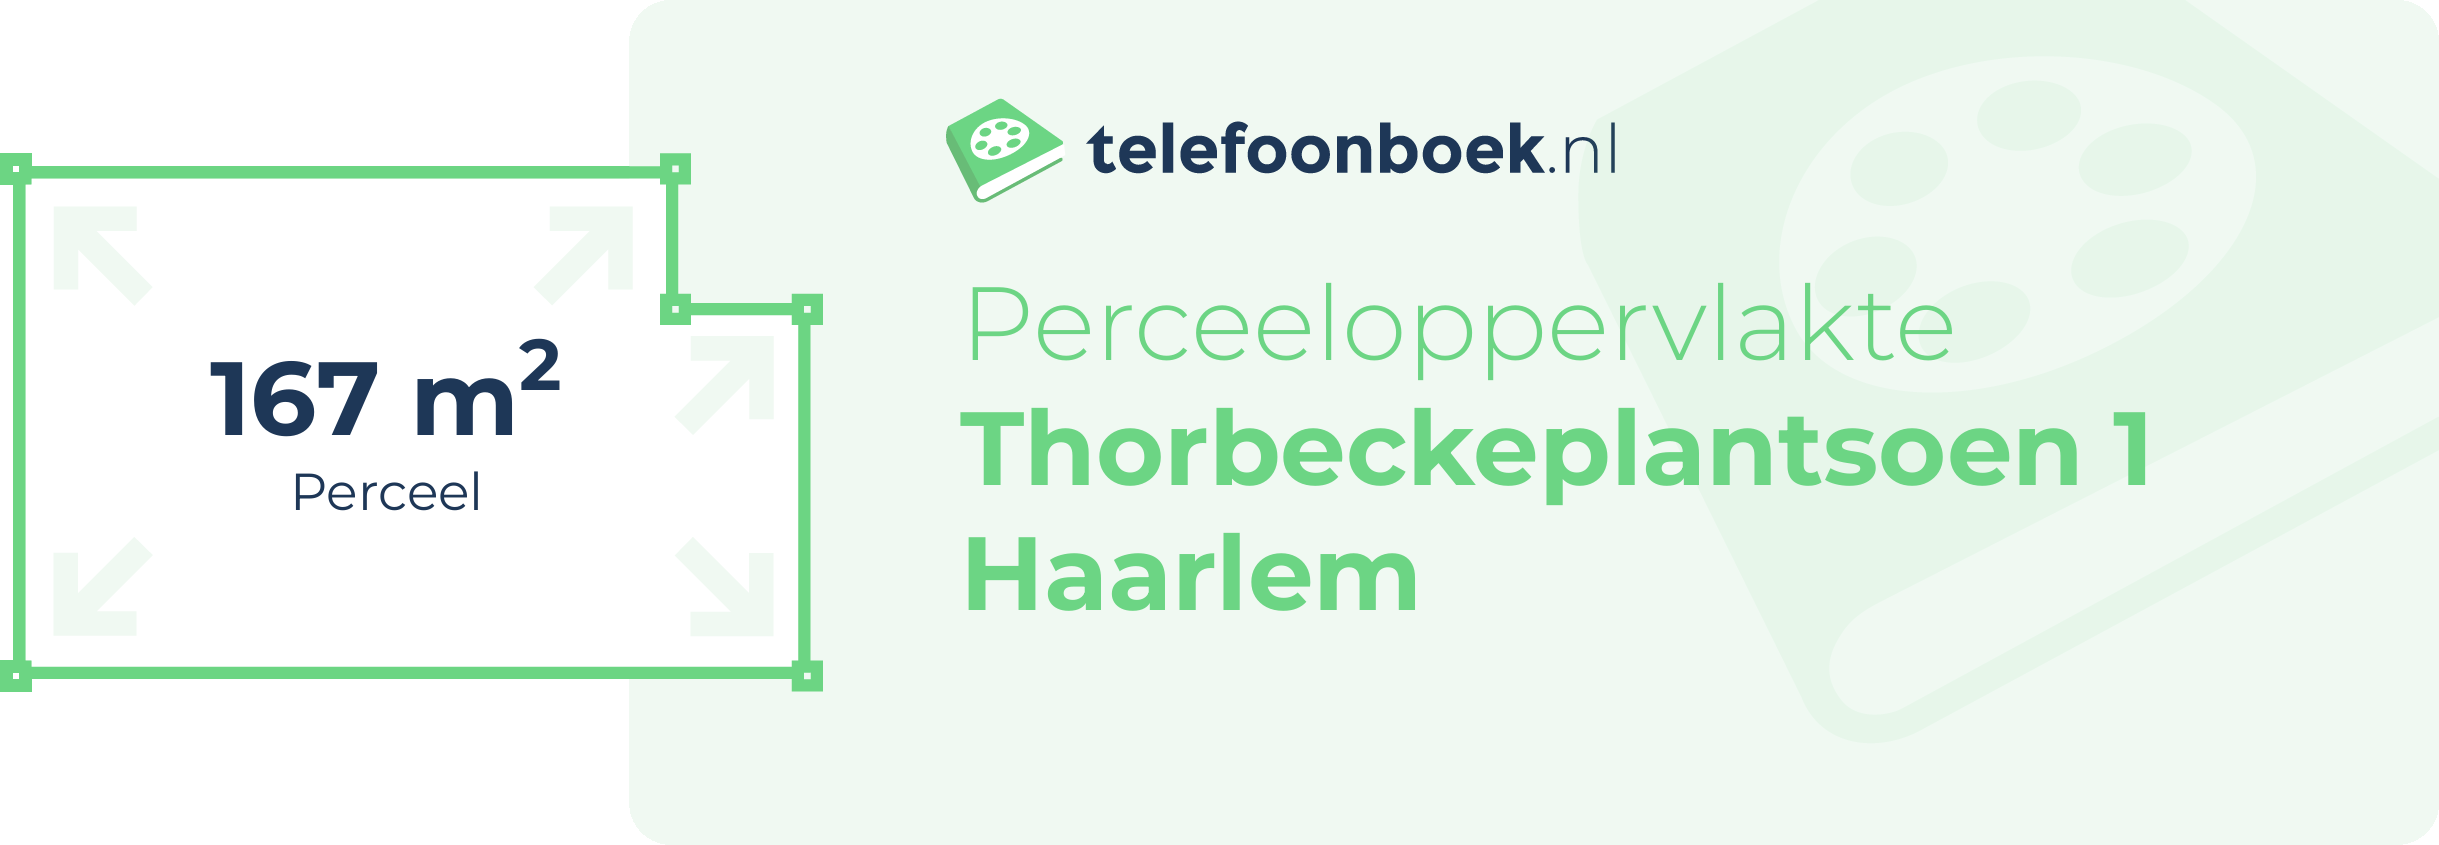 Perceeloppervlakte Thorbeckeplantsoen 1 Haarlem